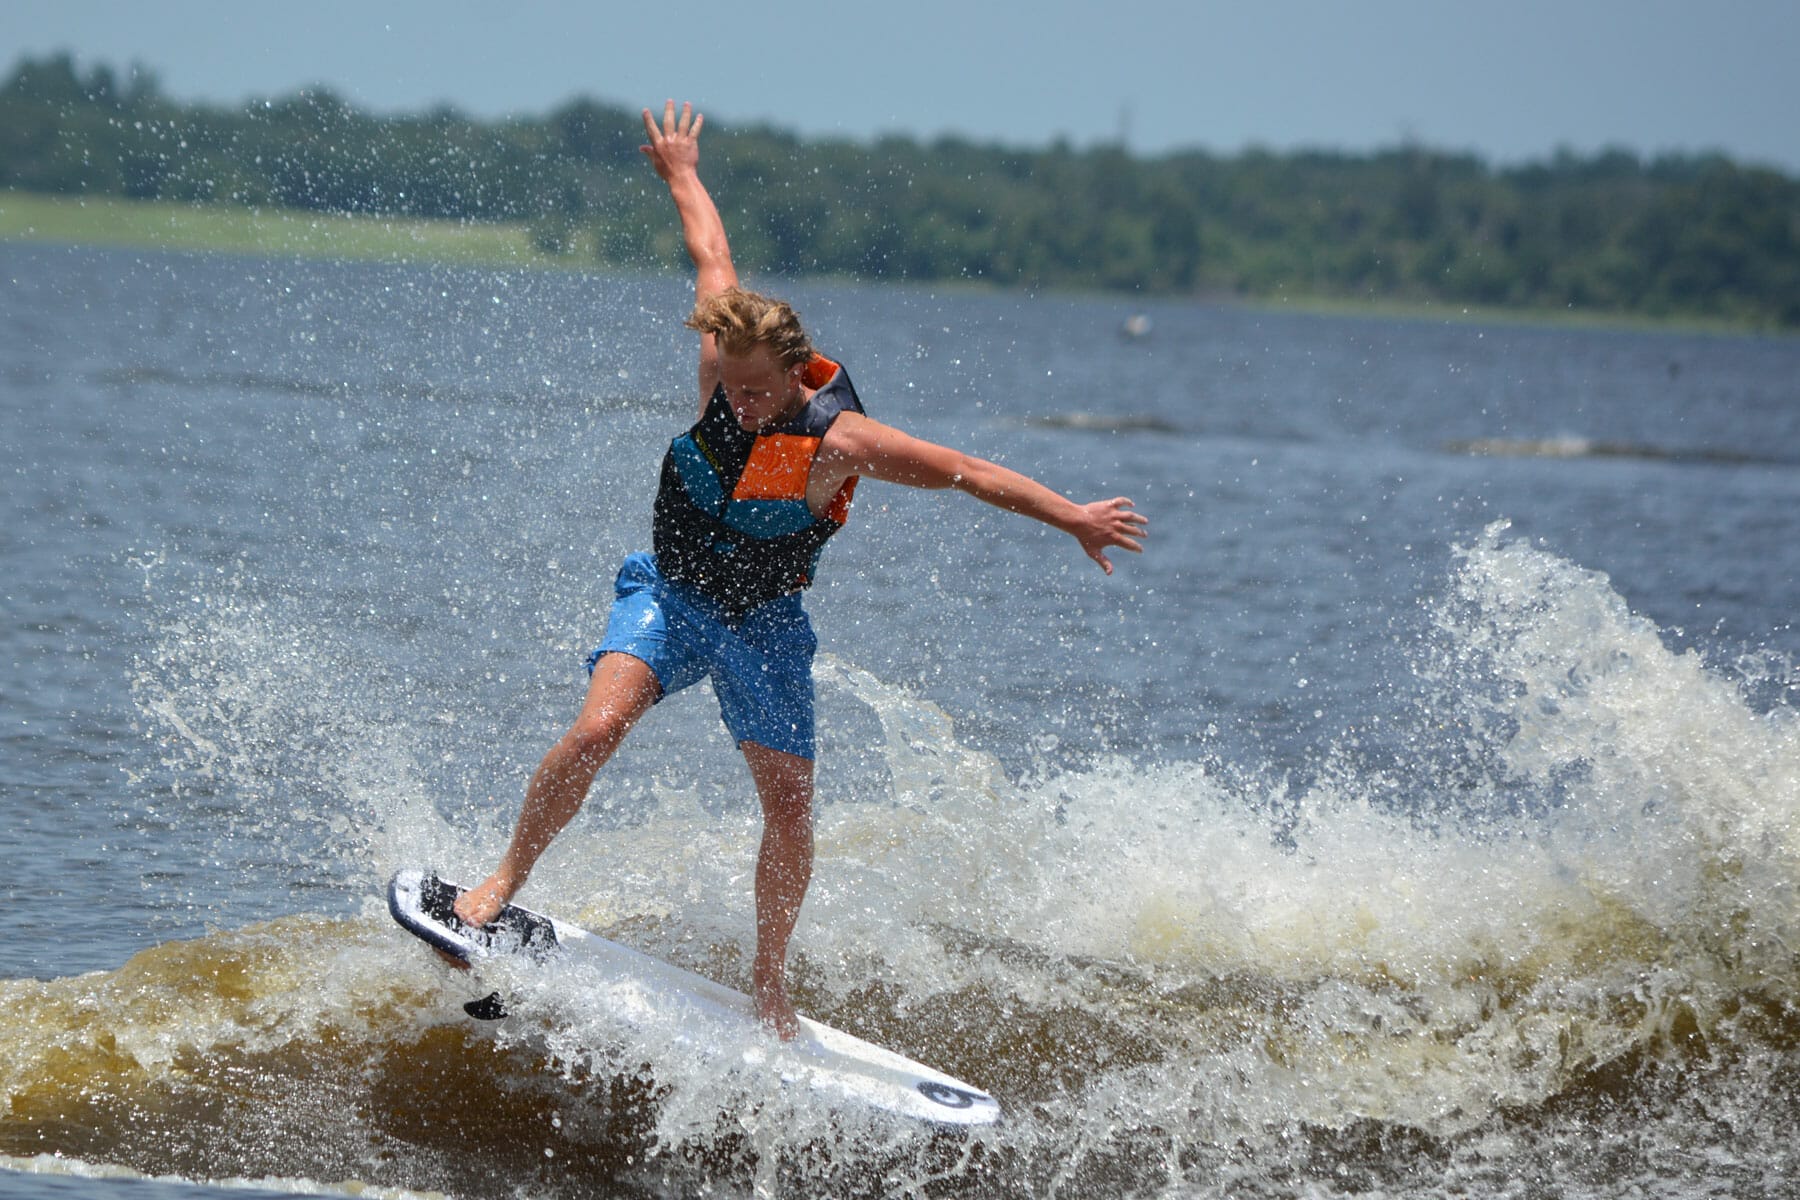 A man riding a wave on a wakesurf board.